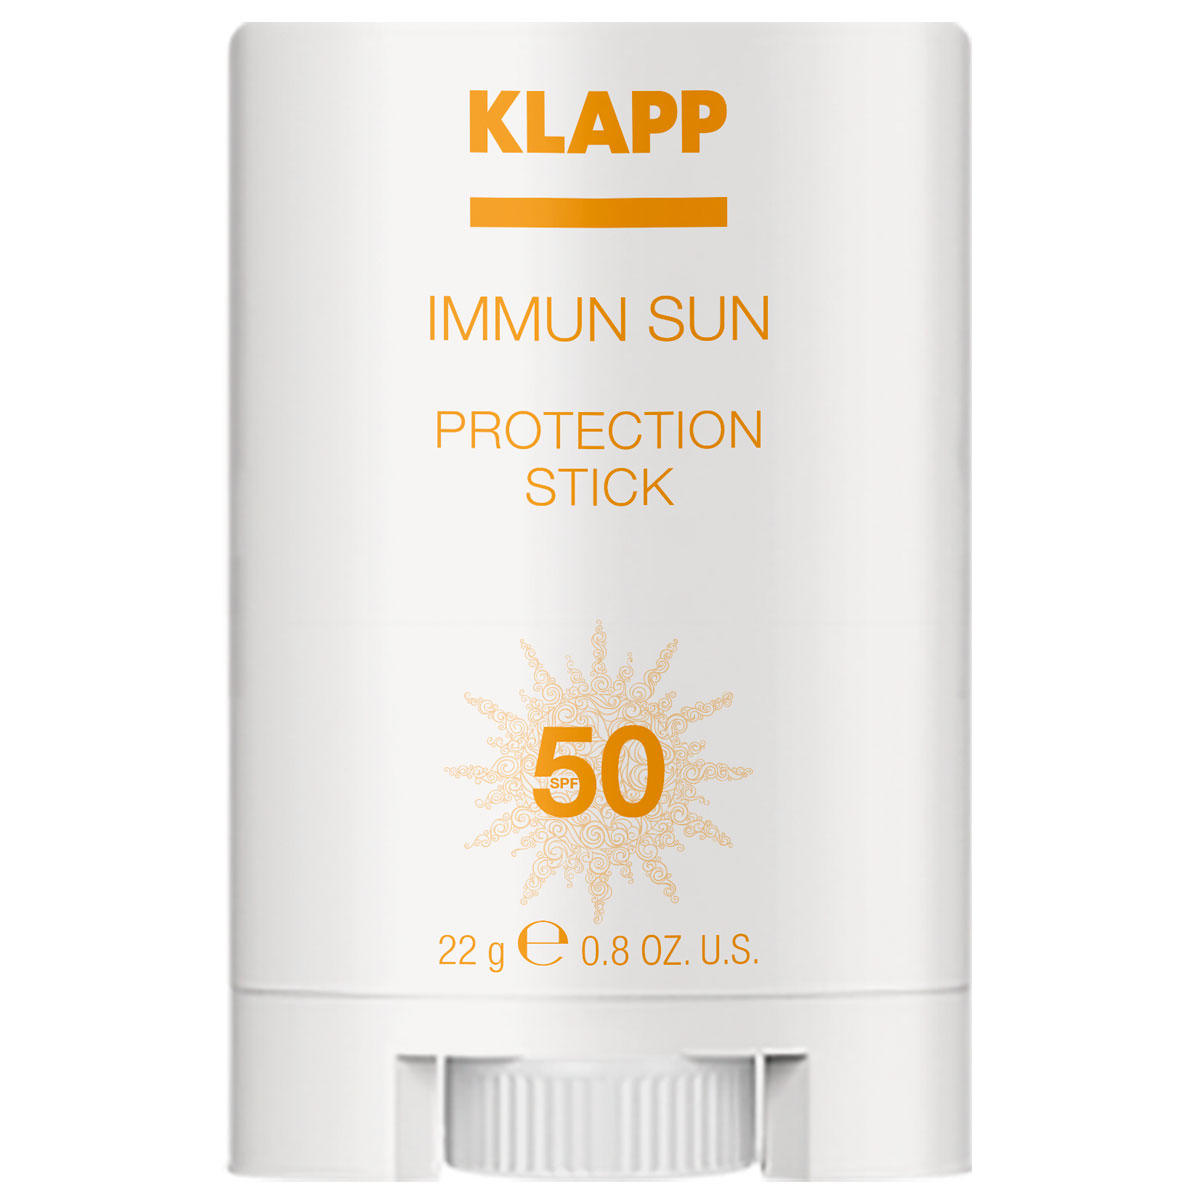 KLAPP IMMUN SUN Protection Stick SPF 50 22 g